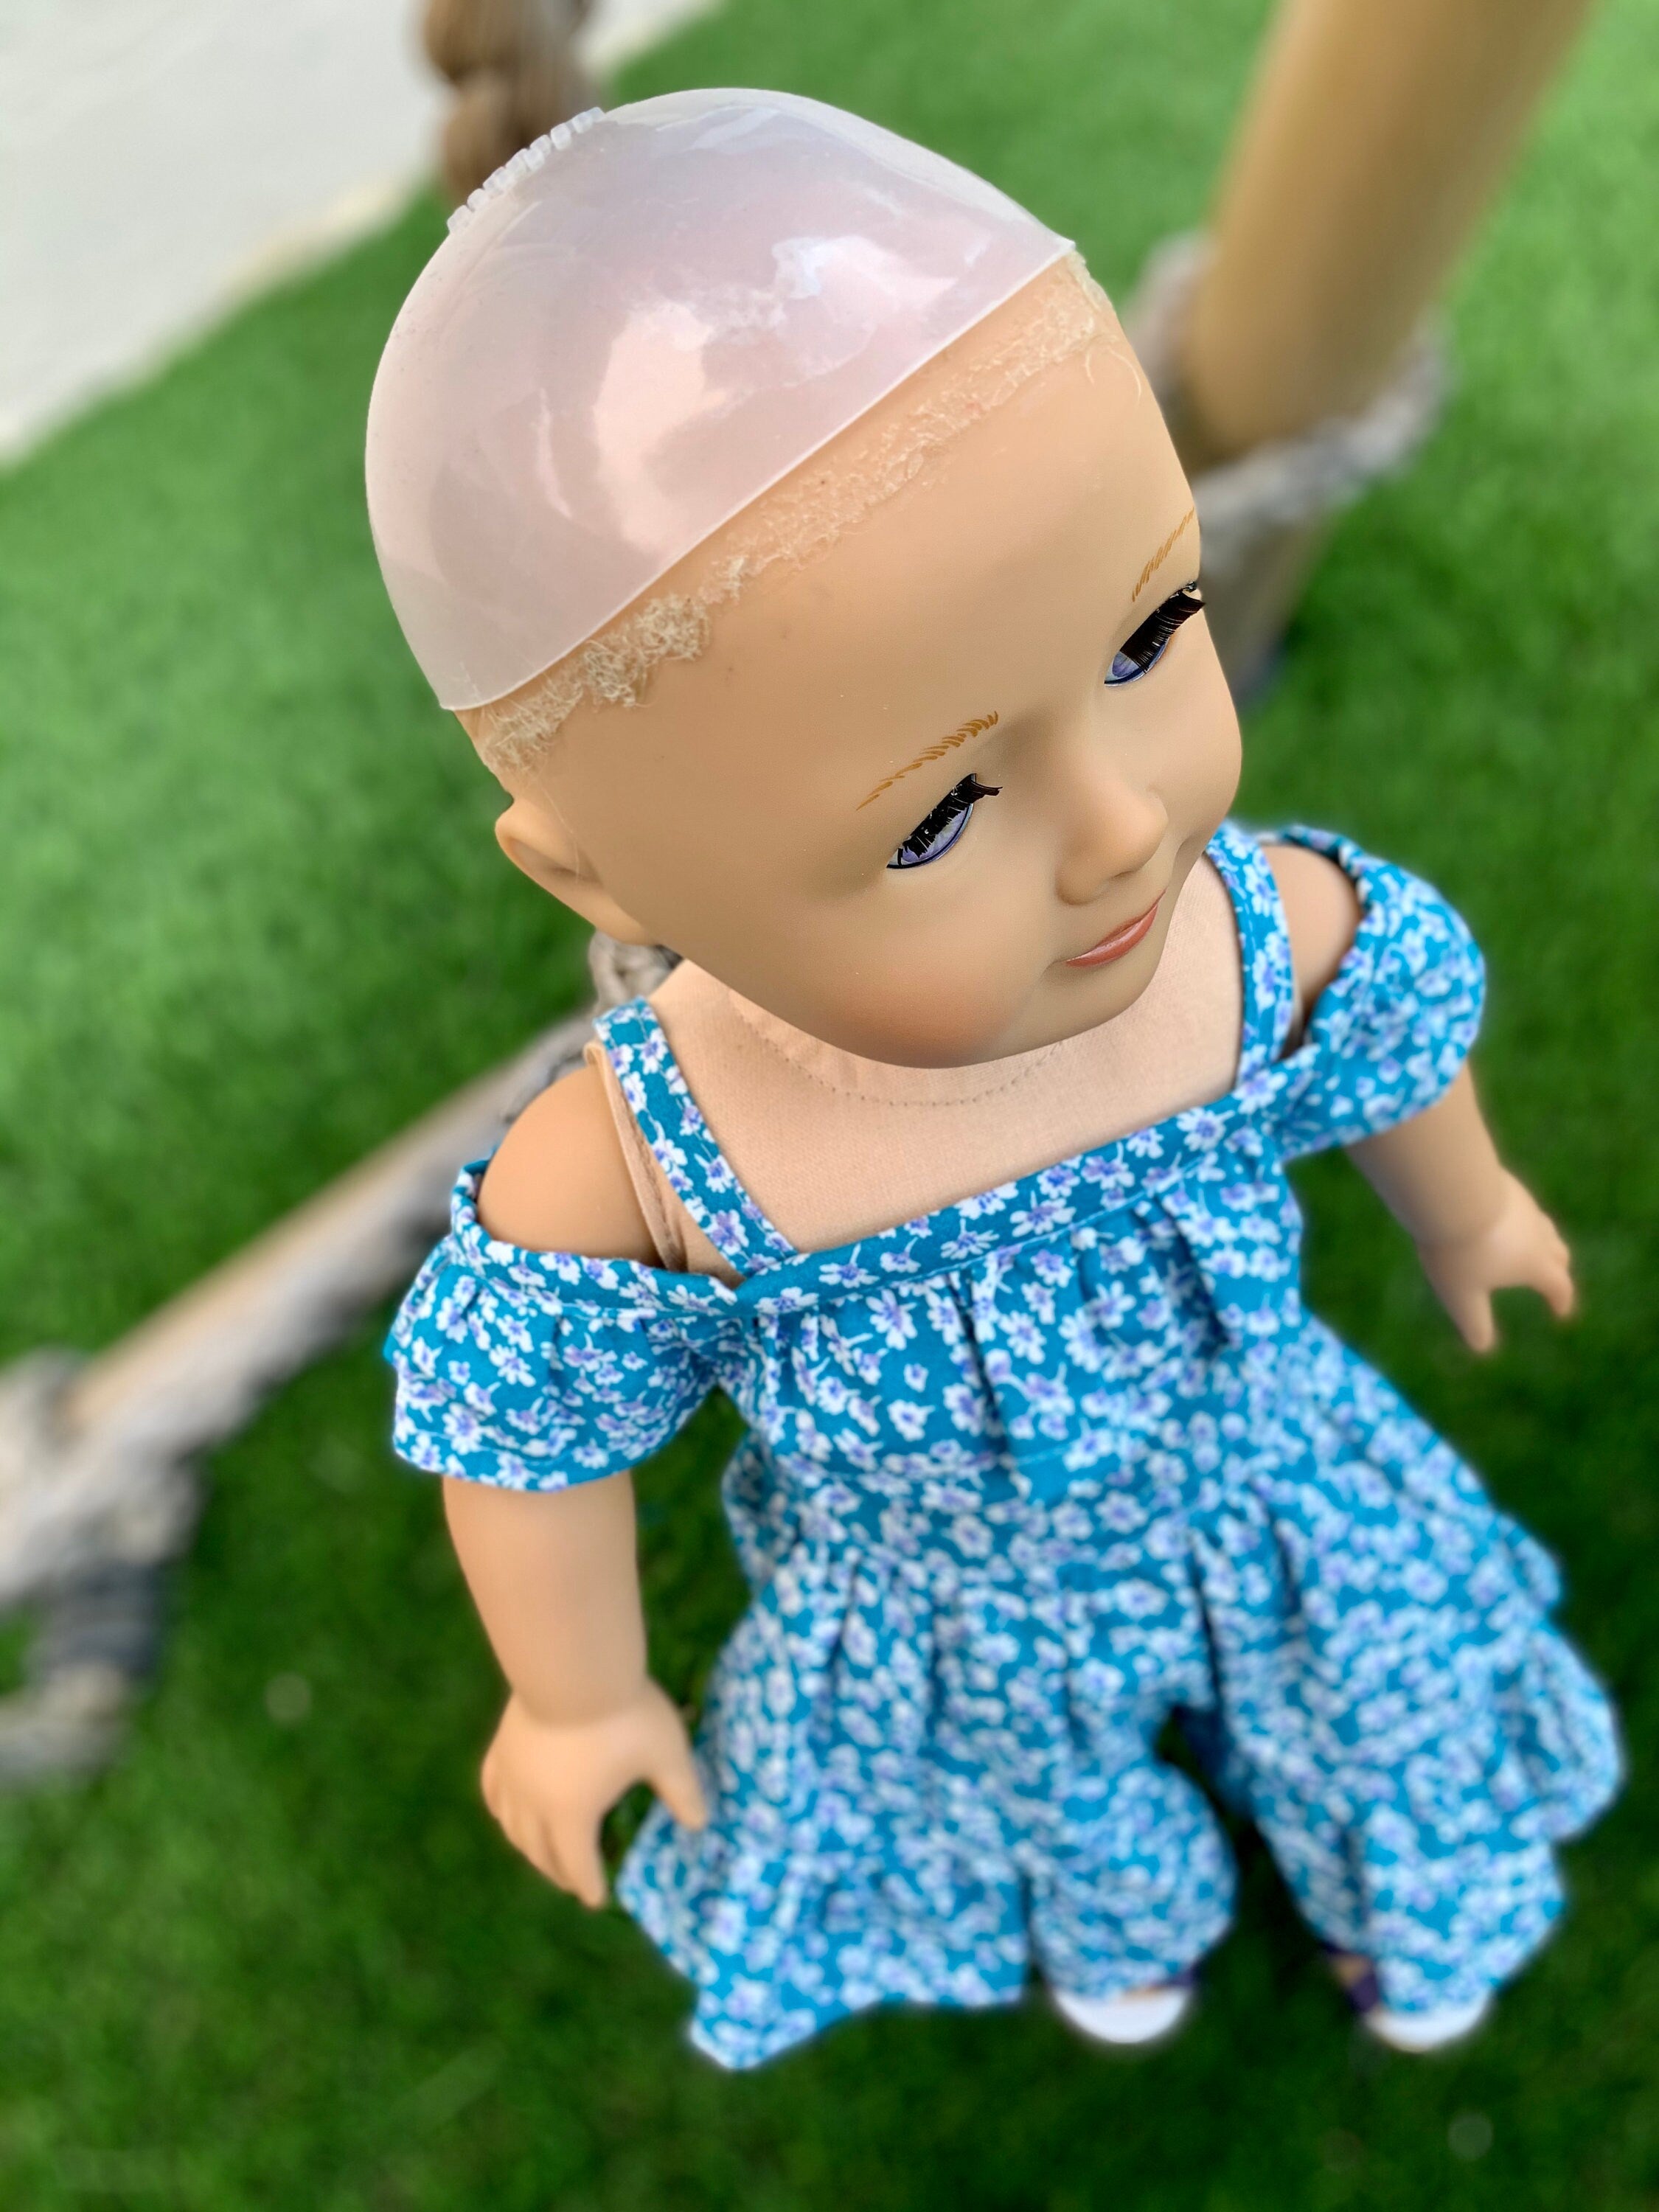 Silicone wig cap for 18" American Girl Dolls  fits 10-11" head size of 18" dolls OG Blythe BJD Gotz